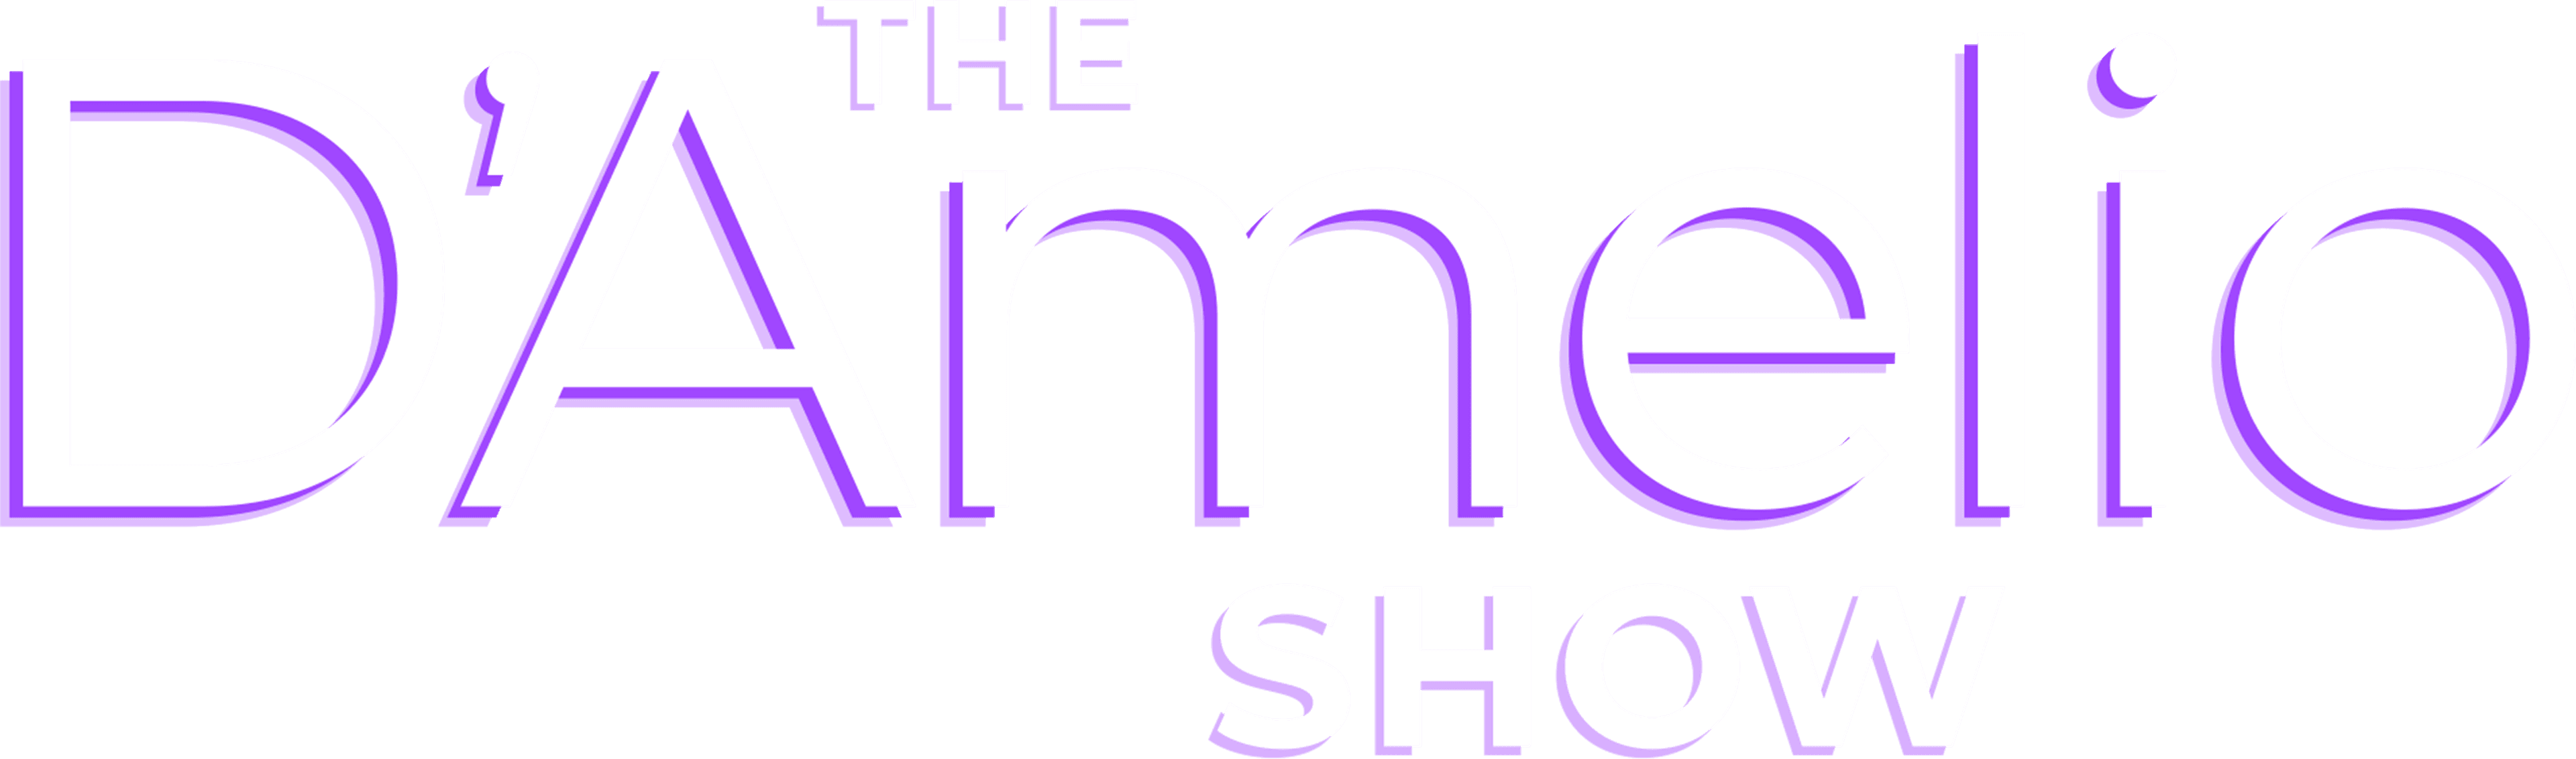 The D'Amelio Show logo